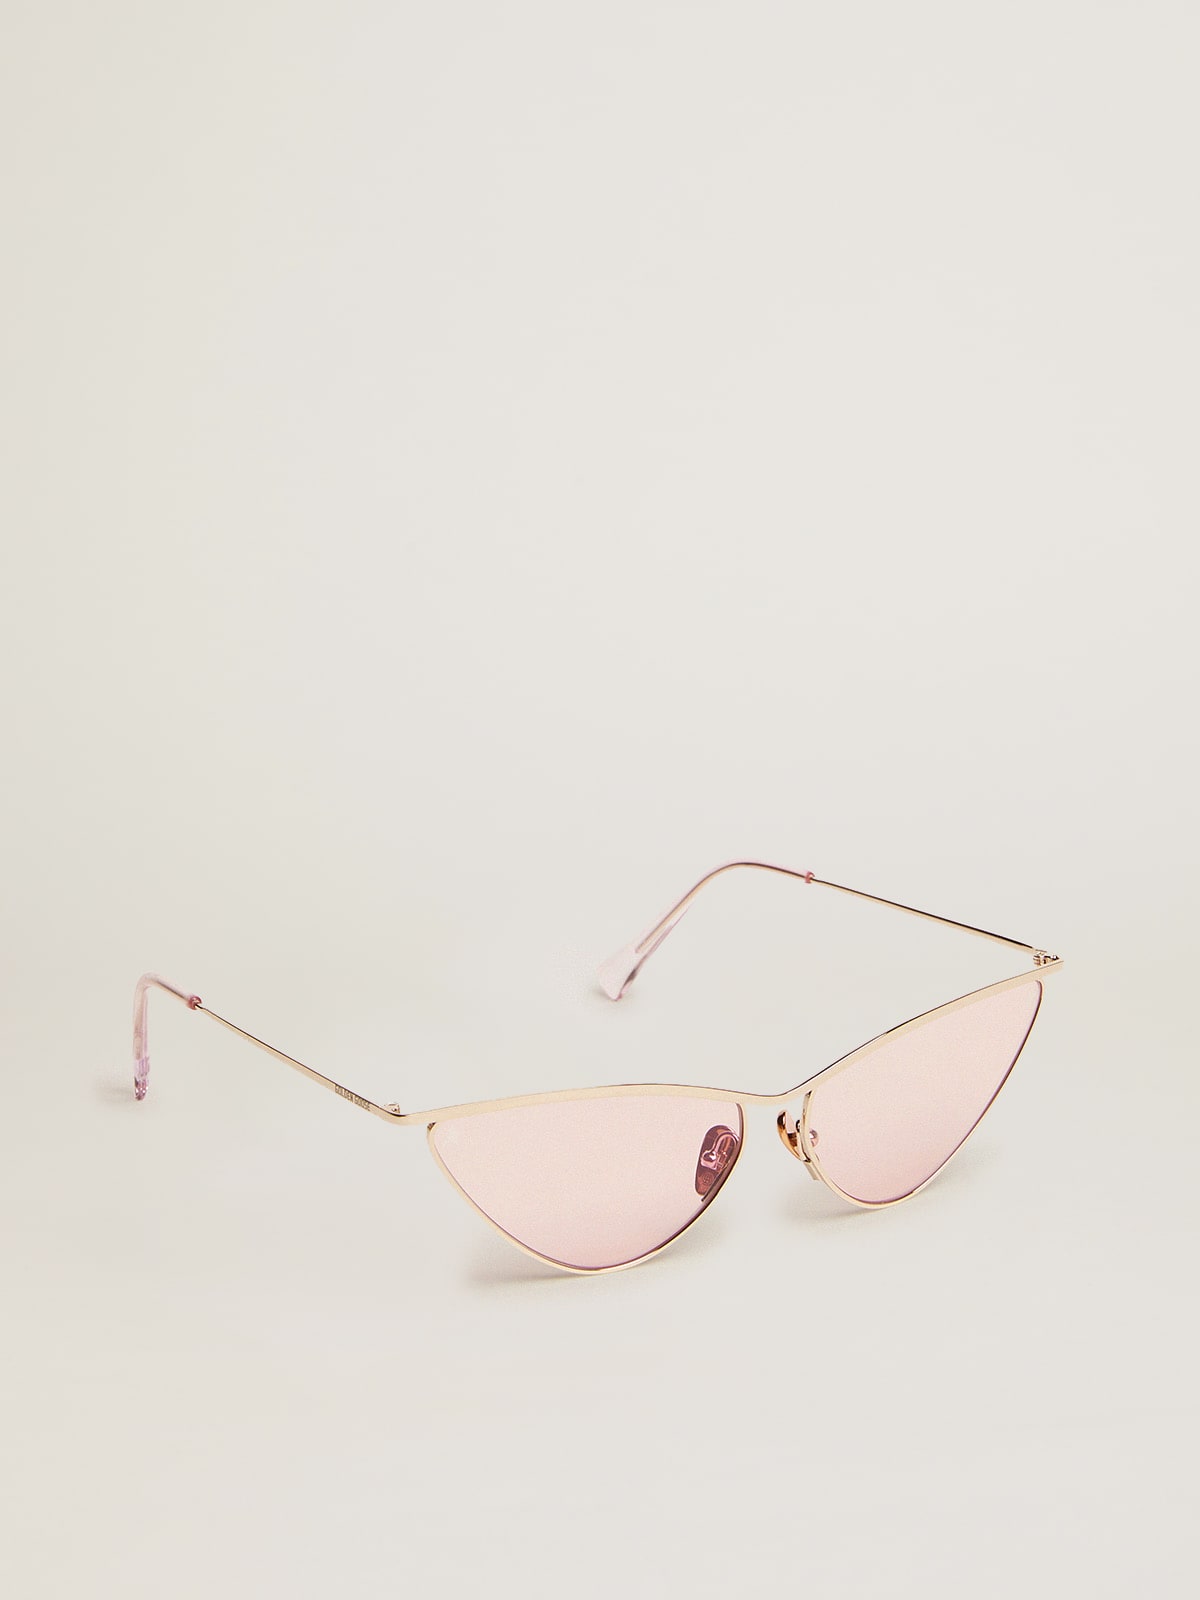 Golden Goose - Cat eye-style Sunframe Scarlett with rose gold frame and pink lenses in 